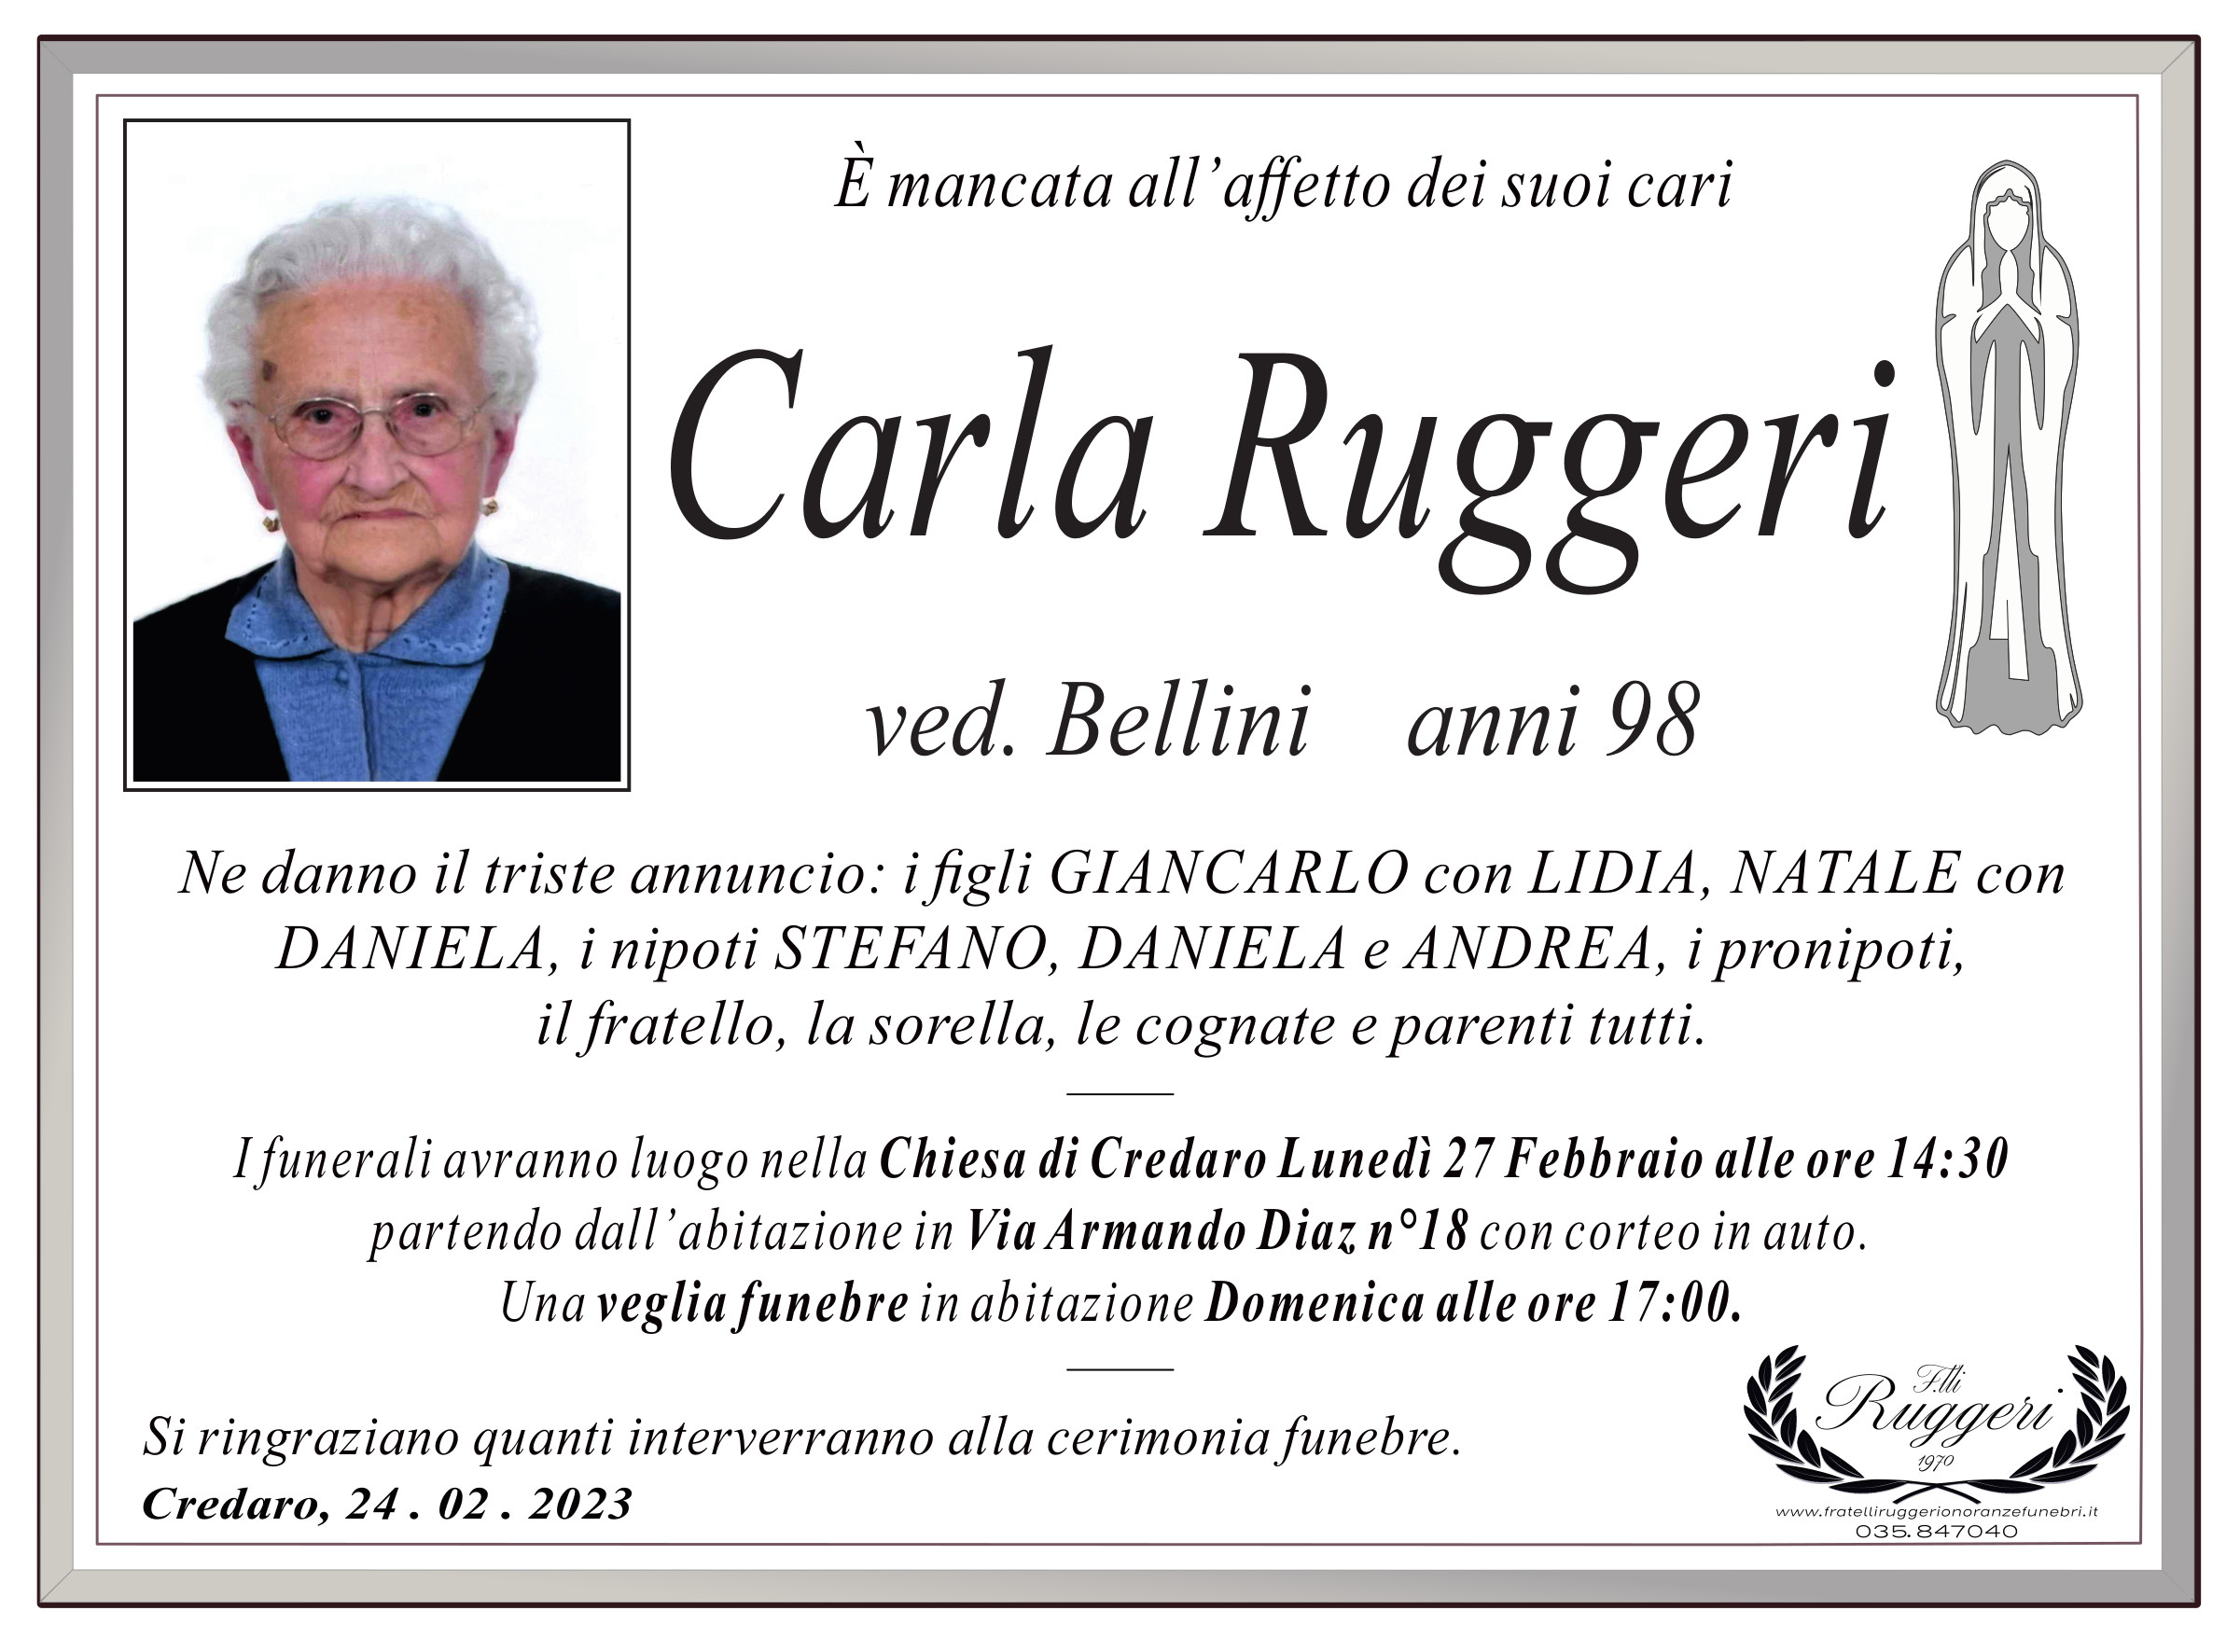 Carla Ruggeri - Condoglianze Online F.lli Ruggeri